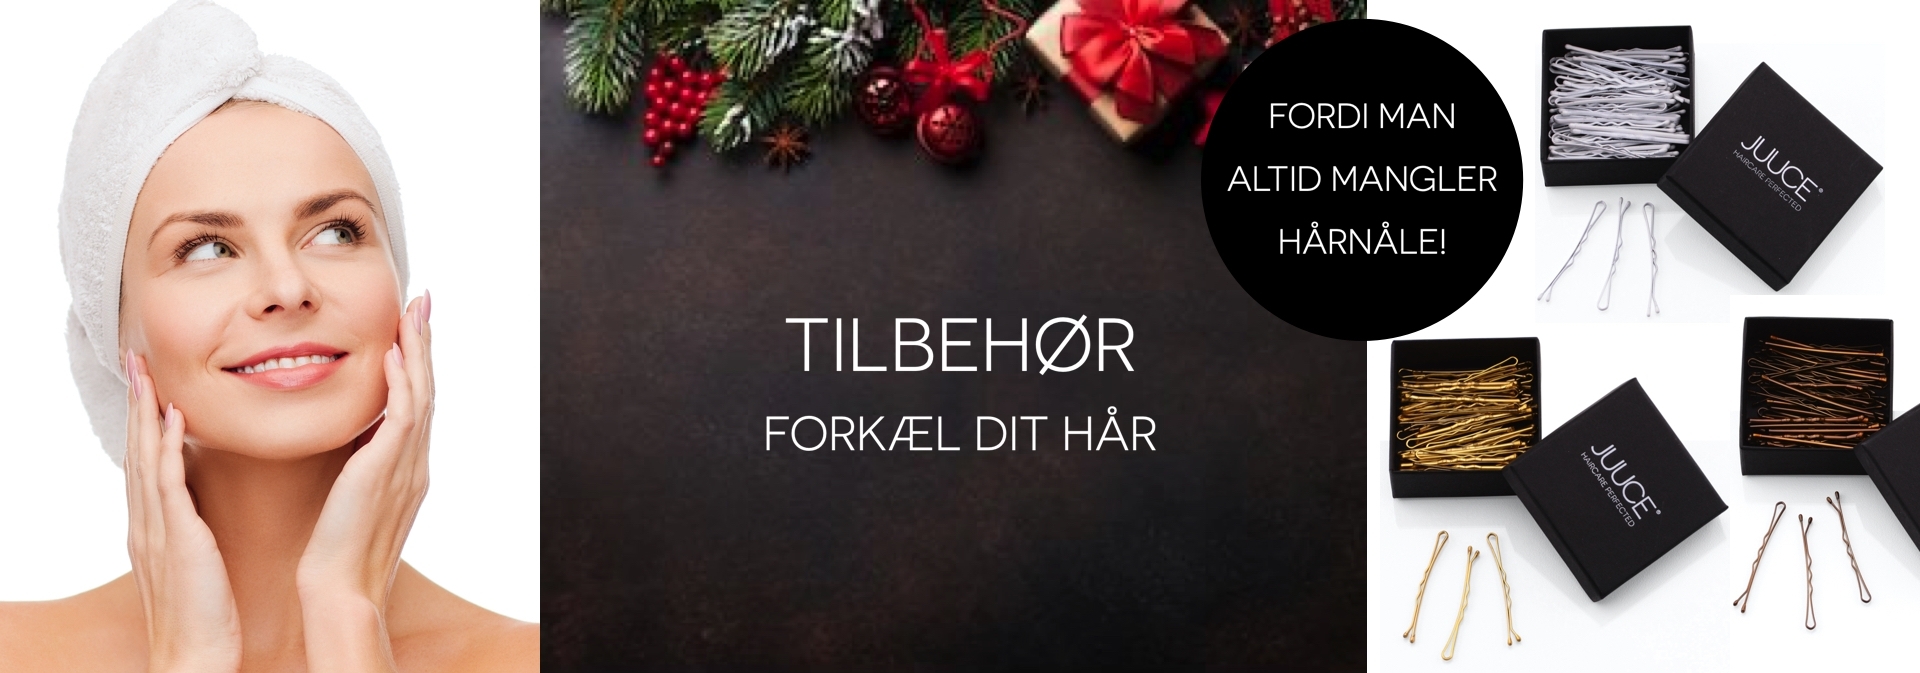 ALT TILBEHØR